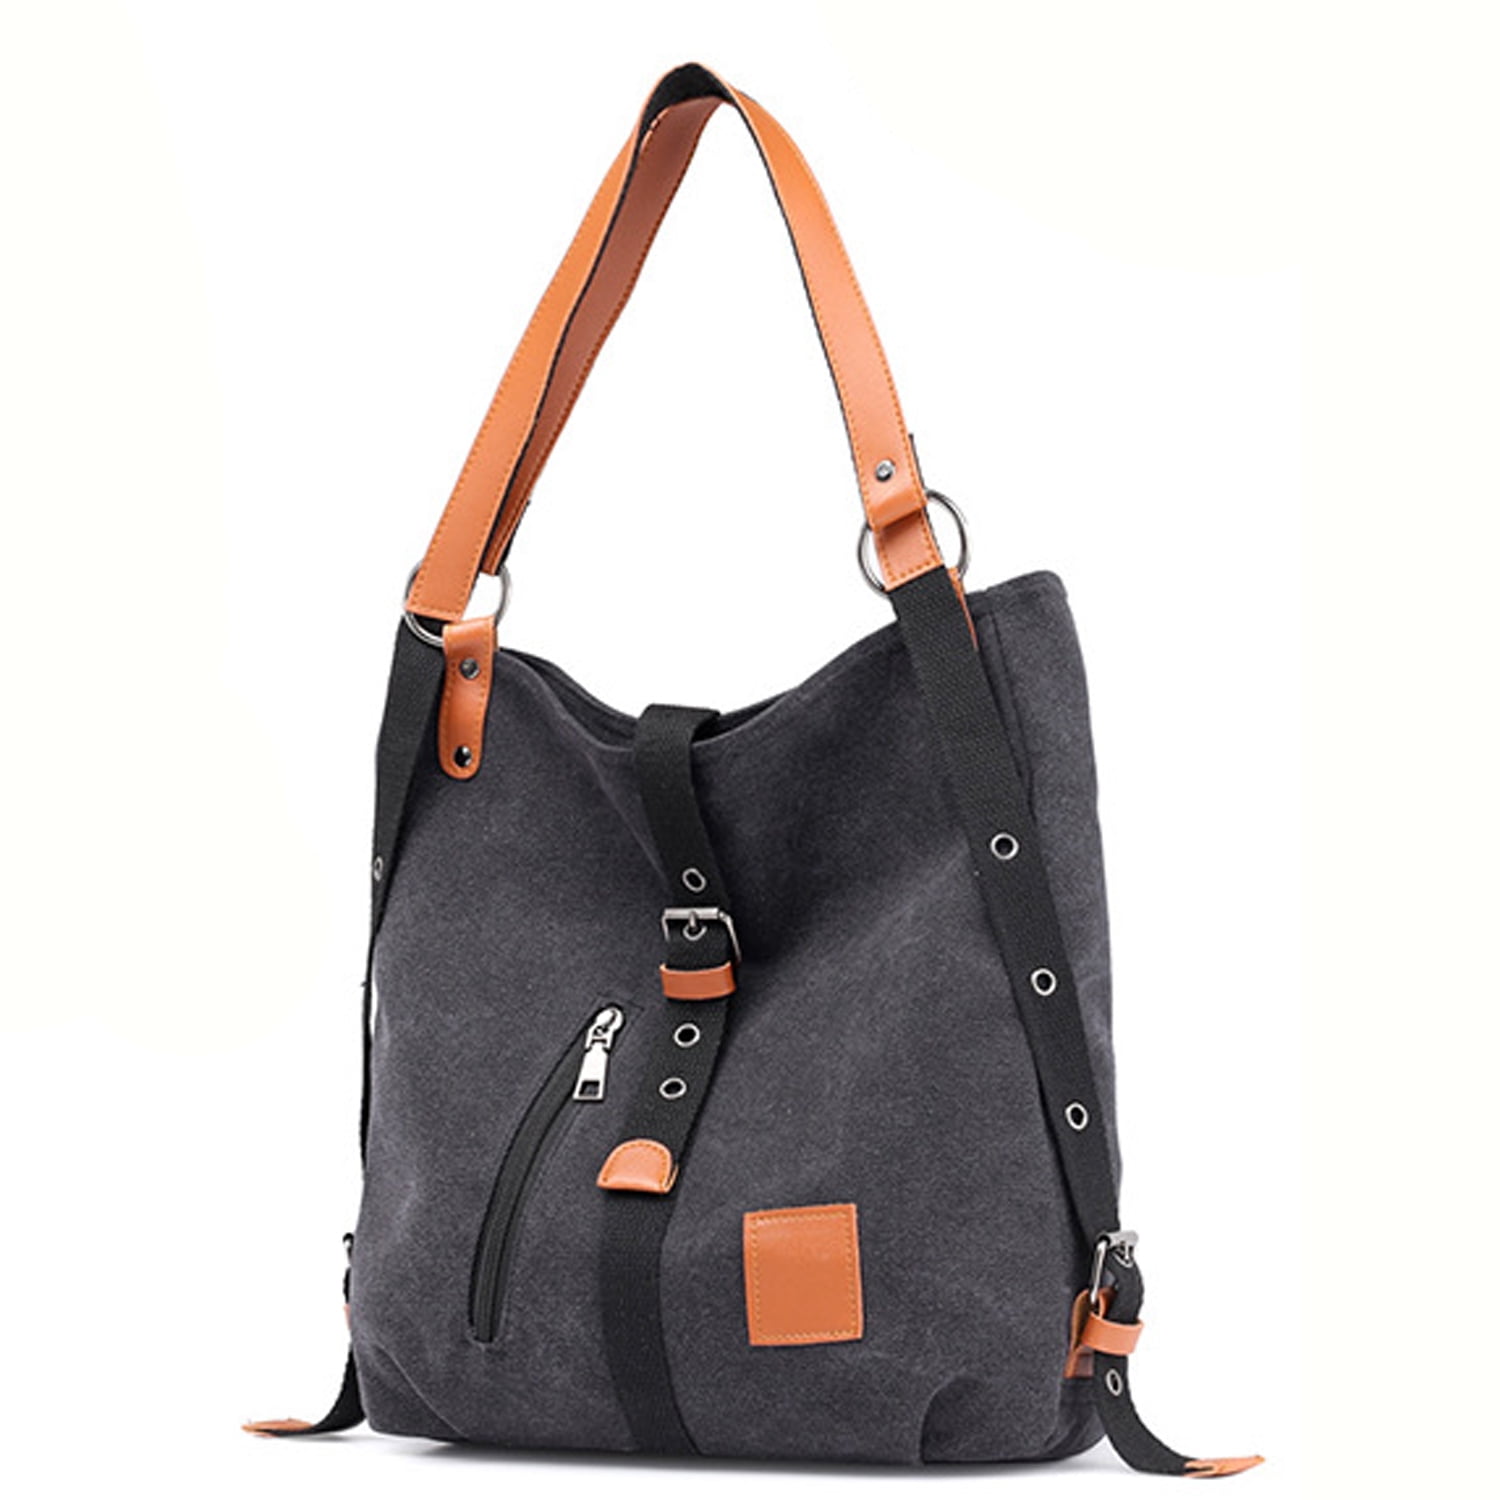 Women s Backpack Purse Fashion Canvas Multi Purpose Design Handbags and Shoulder Bag School Hobo Travel Bag 6d936b39 65f0 401f ad66 f99030d85bf7.a67d73cb6ec1886dba9ef1c5b548d930